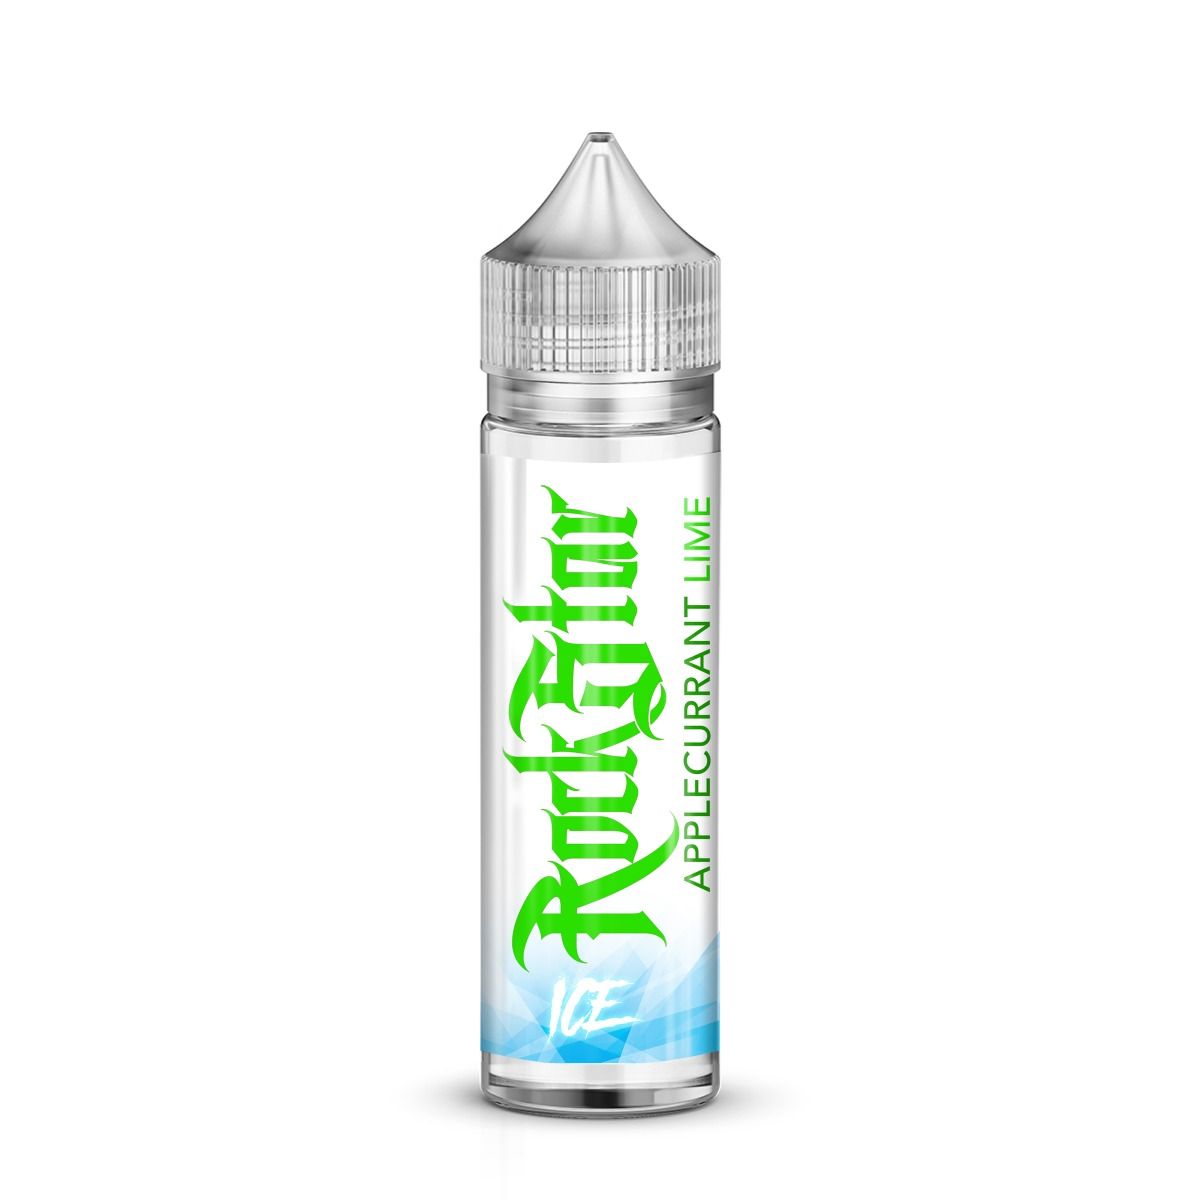 Applecurrant Lime Ice E-Liquid by Rockstar 50ml Shortfill